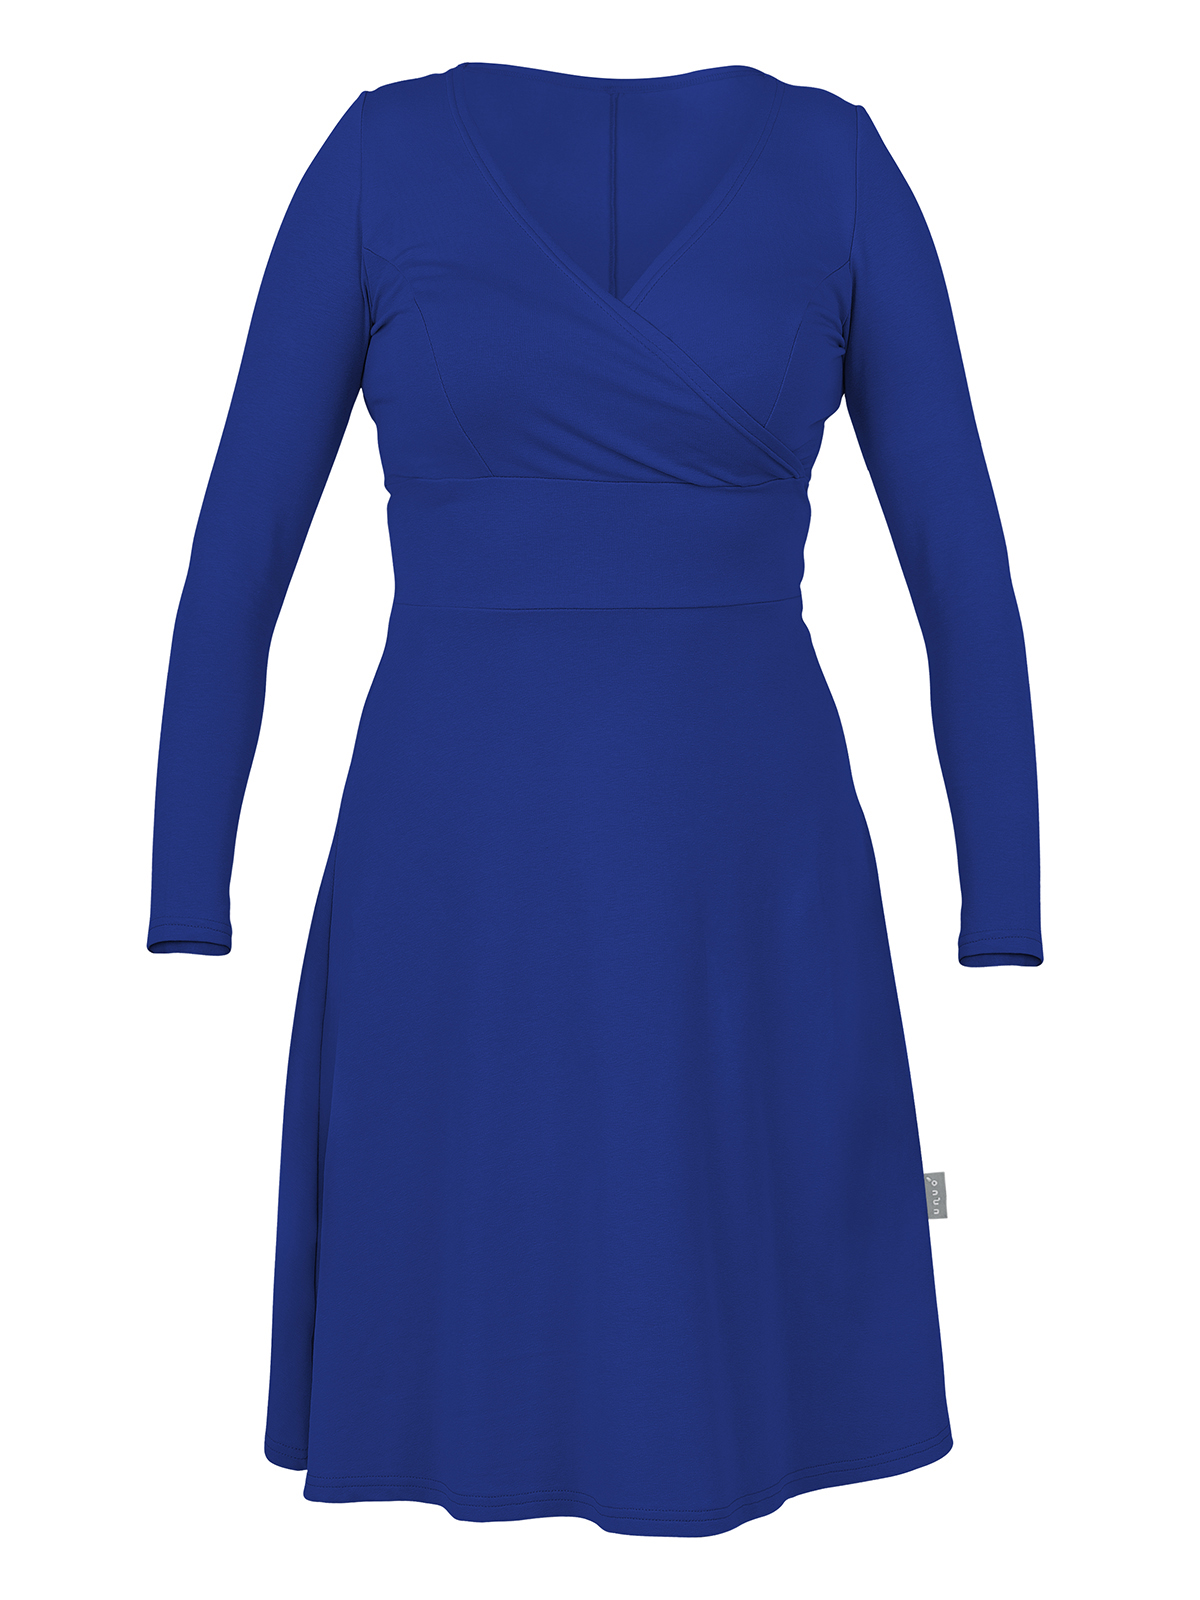 Unuo, Dámské šaty Italiano, Modrá Námořnická, XL